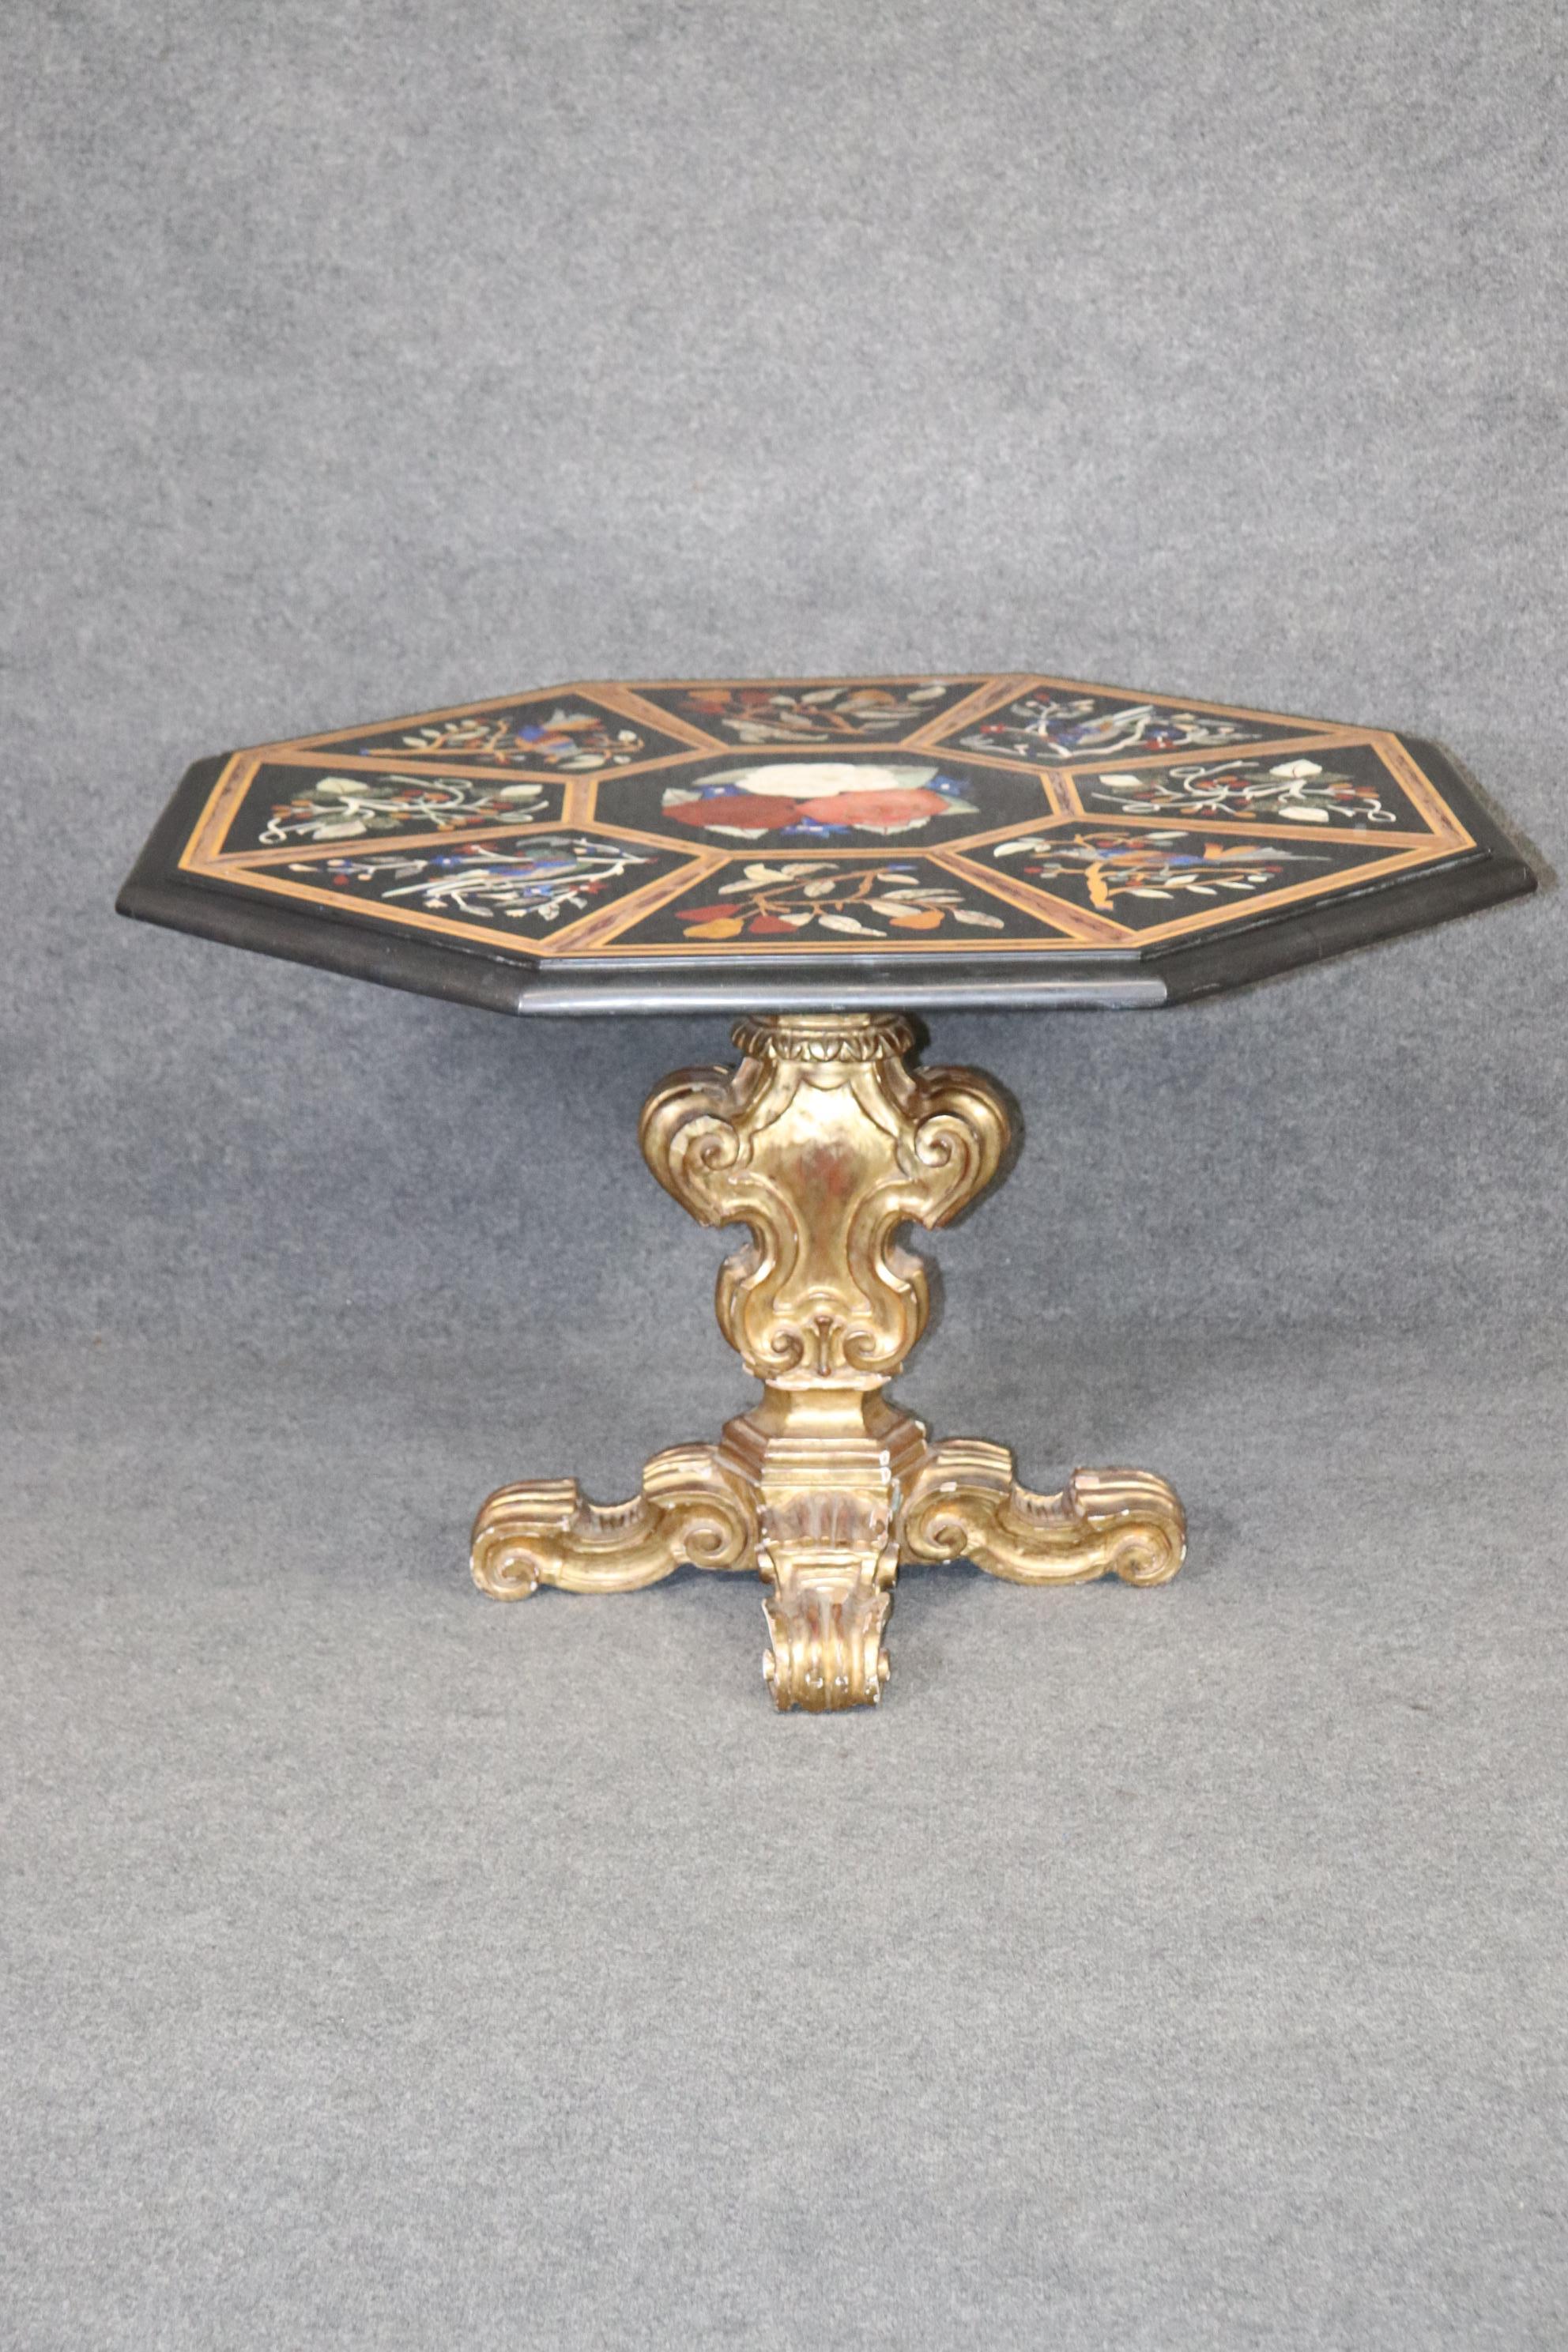 Italian Gilded Rococo Pietra Dura Inlaid Marble Top Center Table, circa 1950s For Sale 3